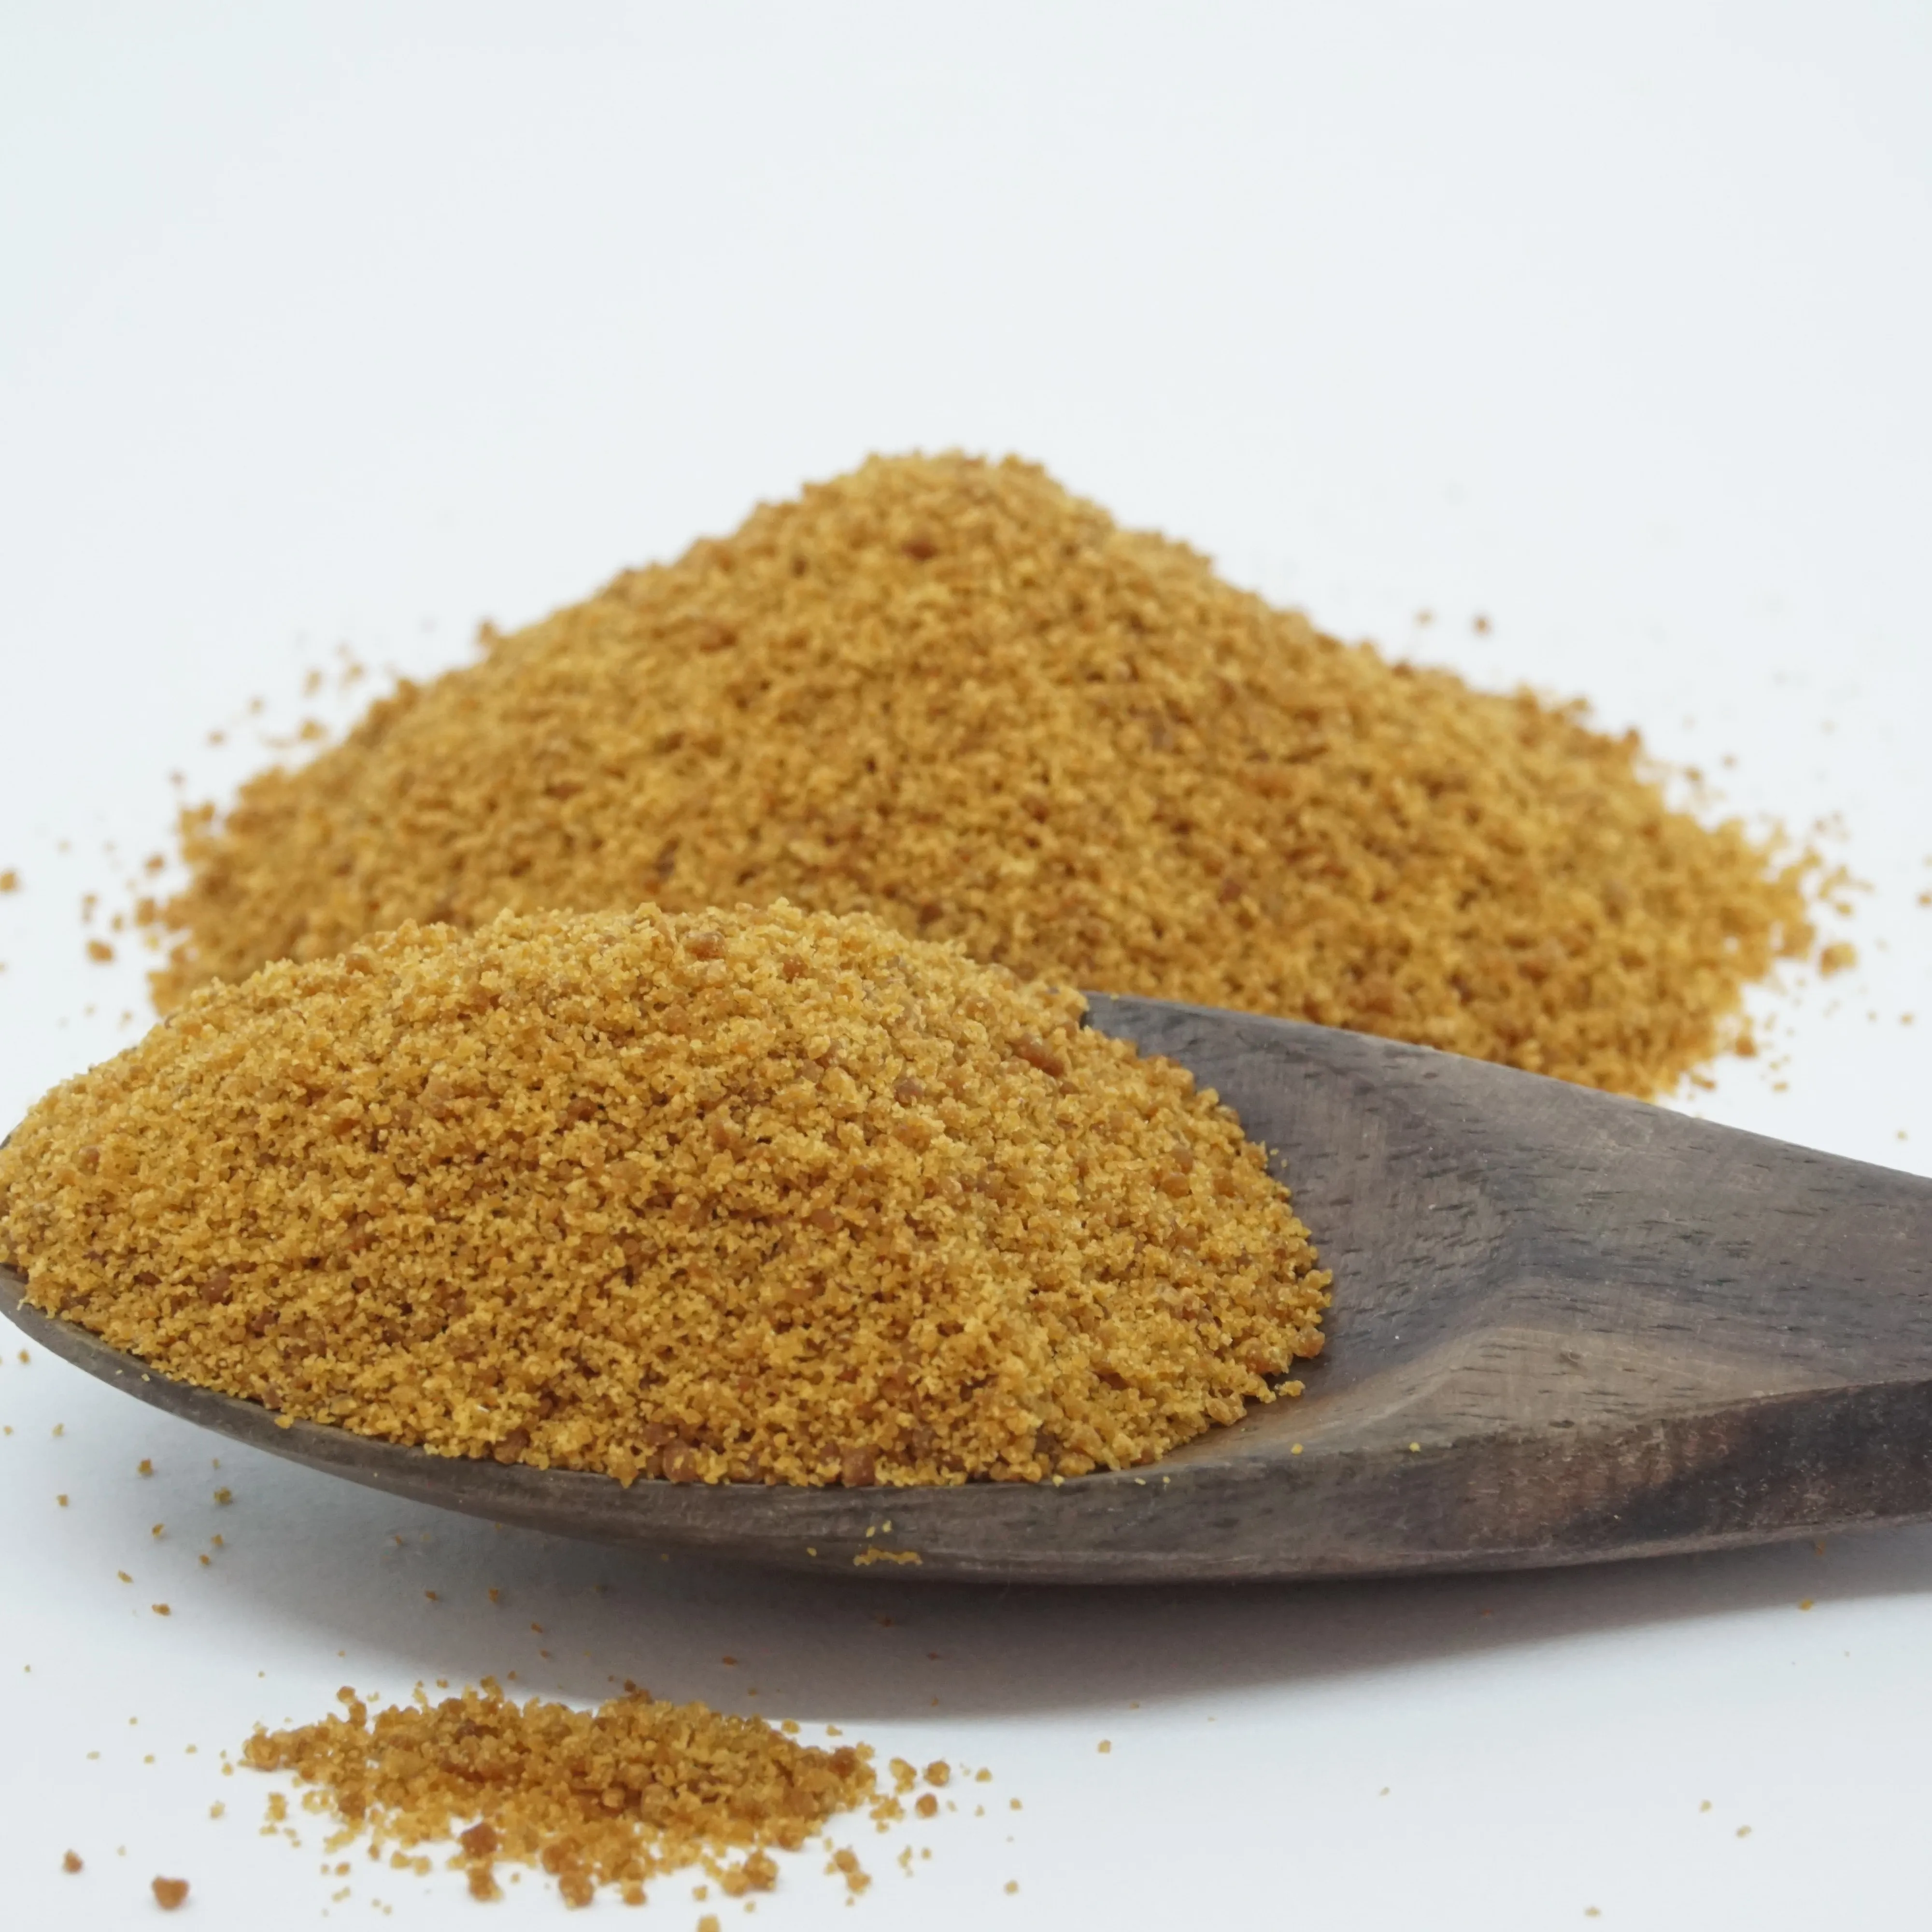 Bulk Organic Cane | Pure and Natural Brown Sugar Powder Supplier of Unrefined Raw Cane Sugar